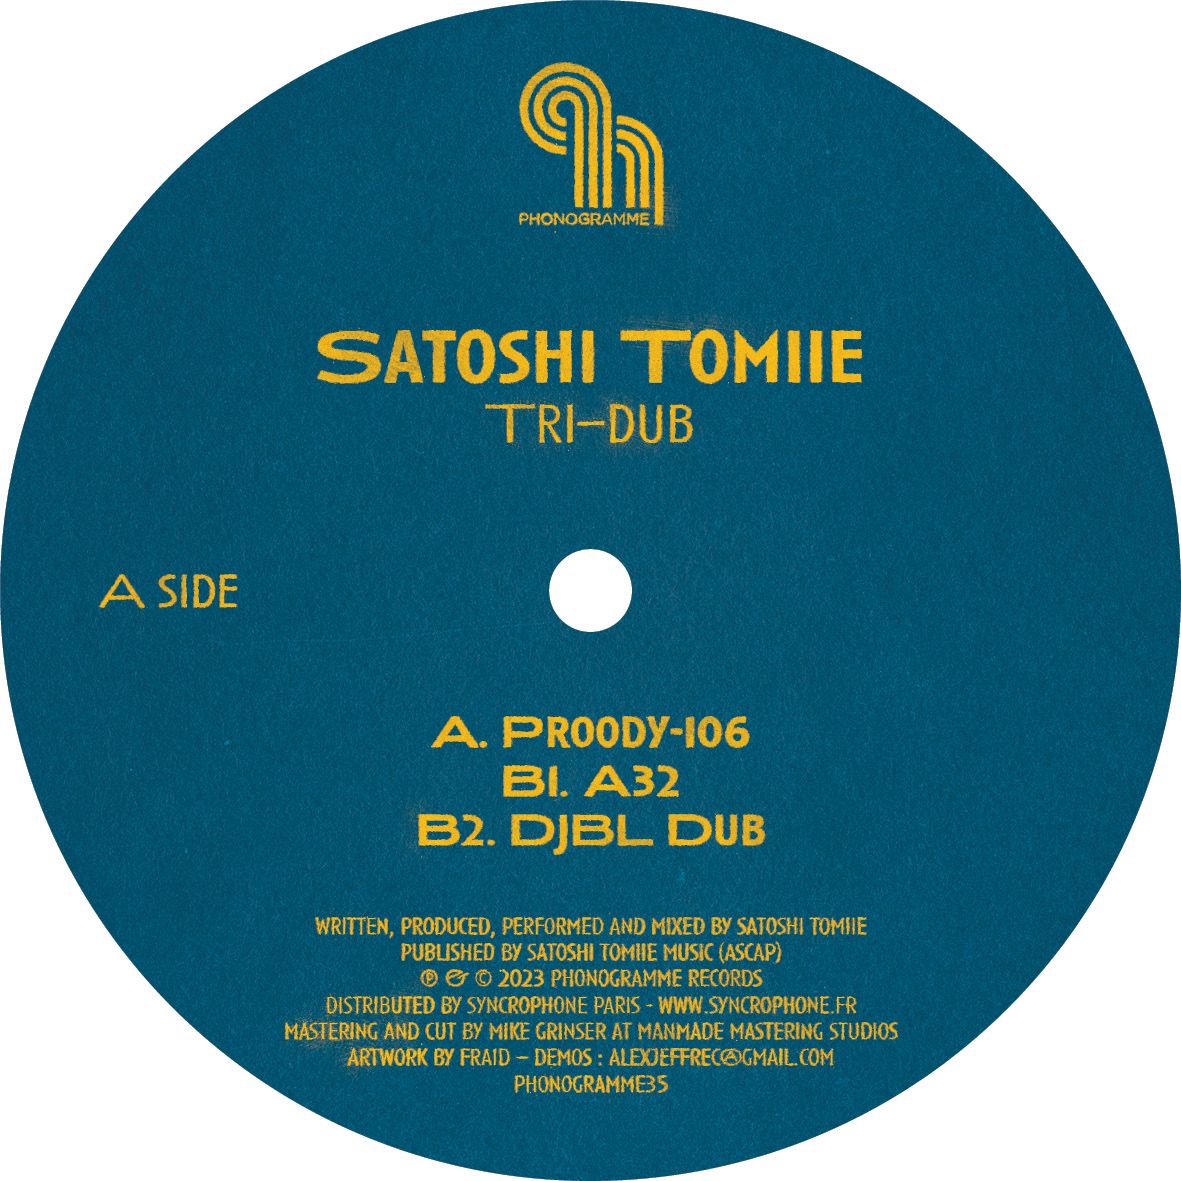 Satoshi Tomiie – Tri-Dub